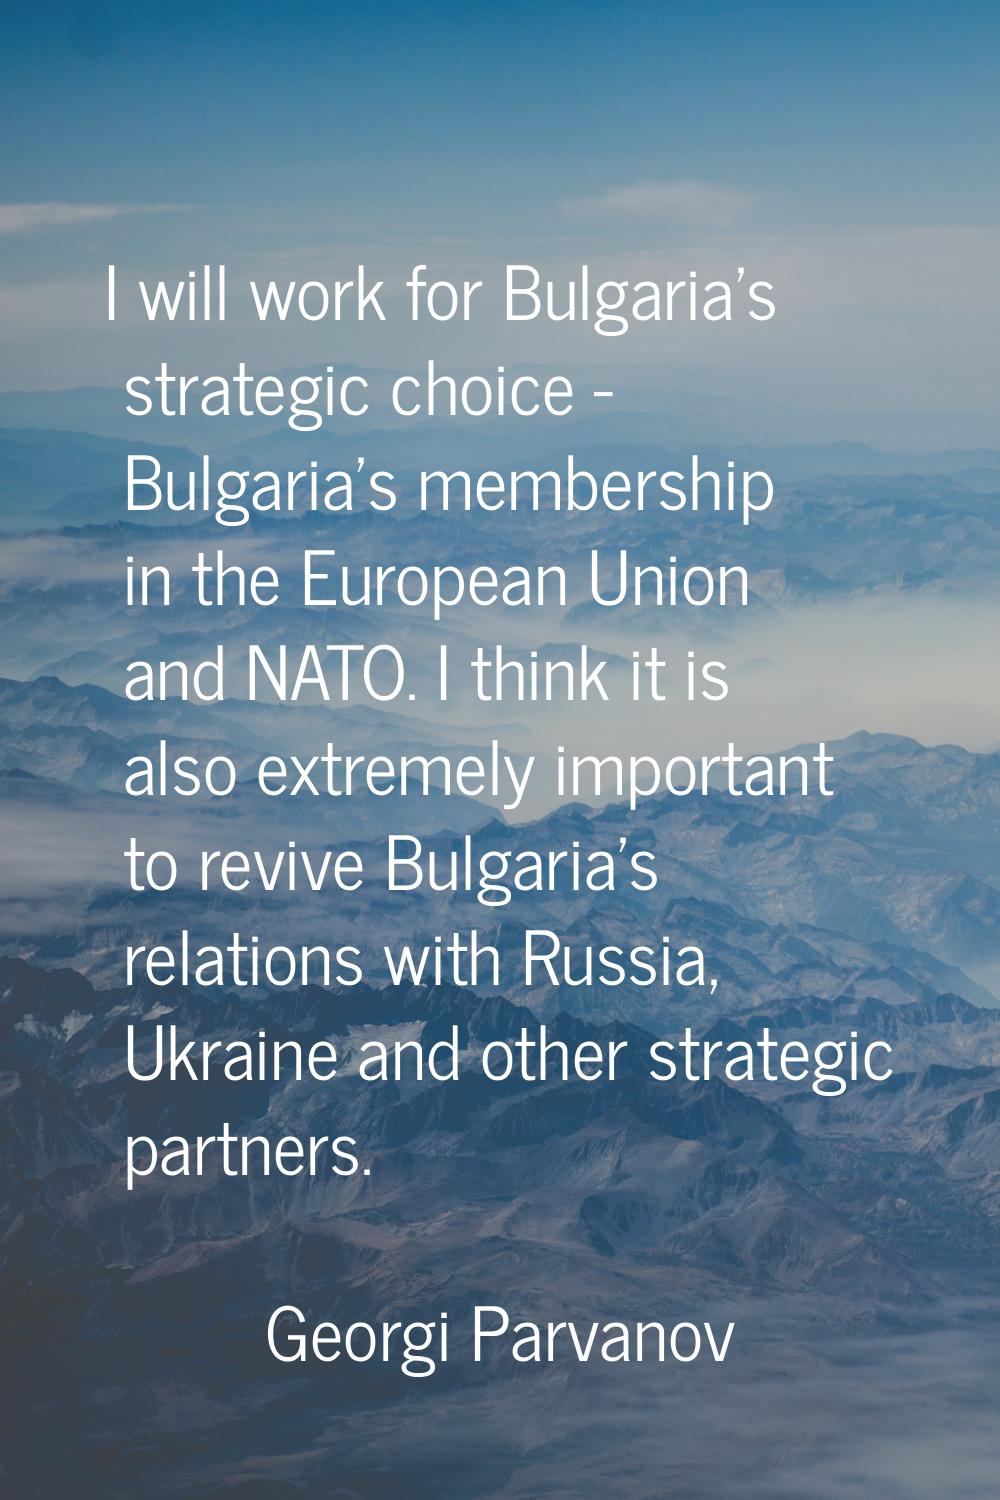 I will work for Bulgaria's strategic choice - Bulgaria's membership in the European Union and NATO.